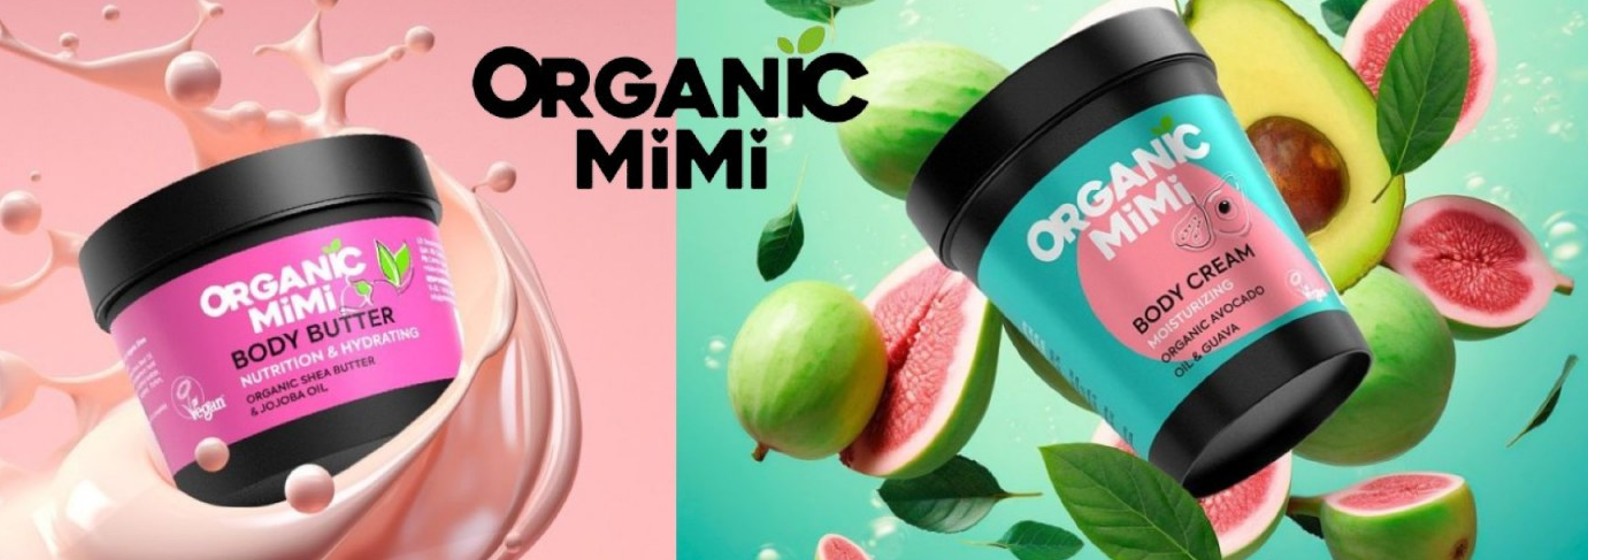 Organic Mimi - BODY